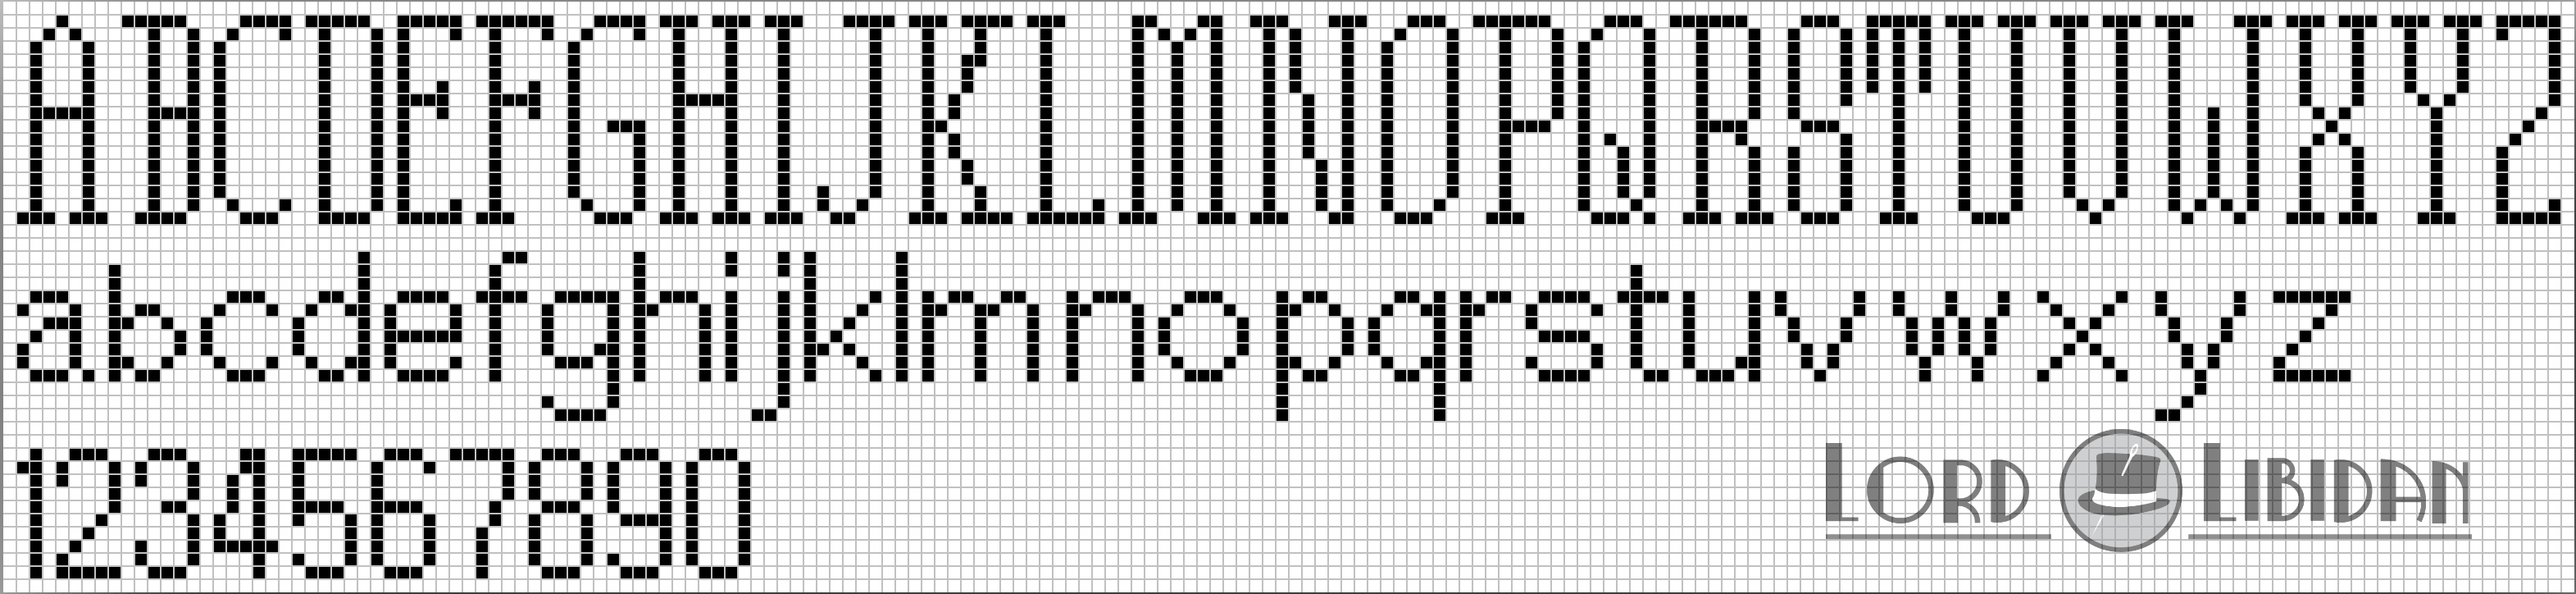 Thin Typeface Cross Stitch Alphabet Pattern Free Download by Lord Libidan